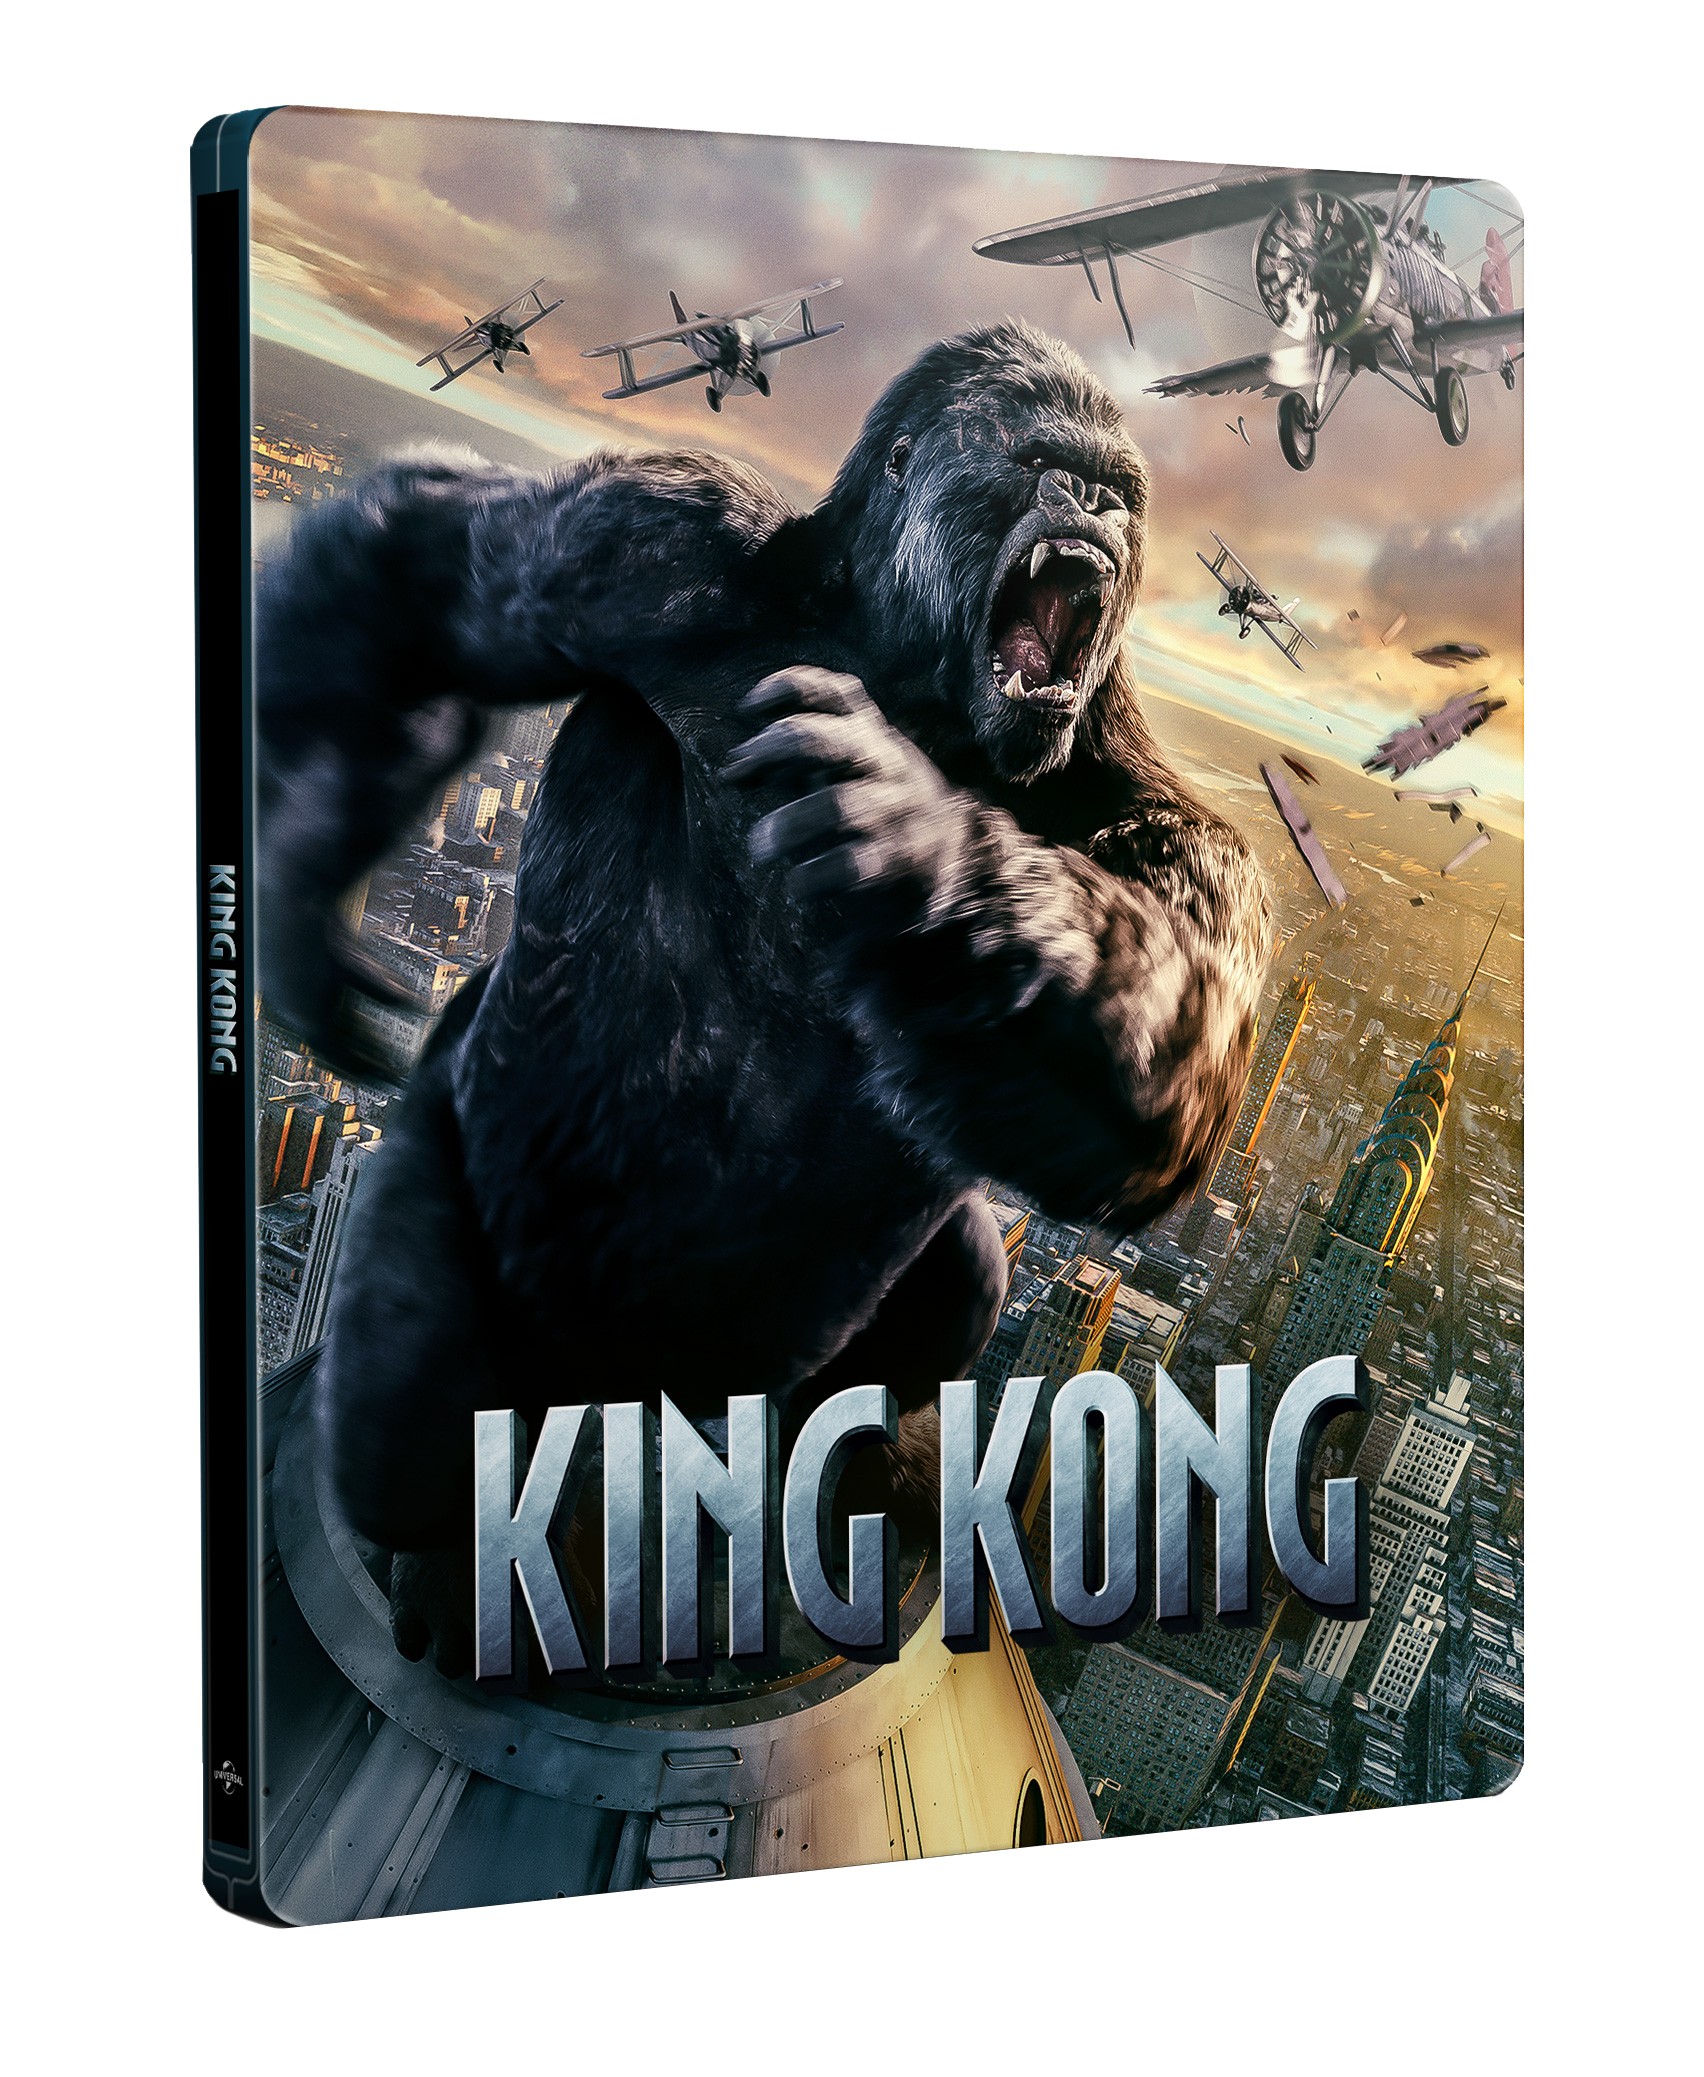 KING KONG - COMBO UHD 4K + 2 BD - STEELBOOK - EDITION LIMITEE